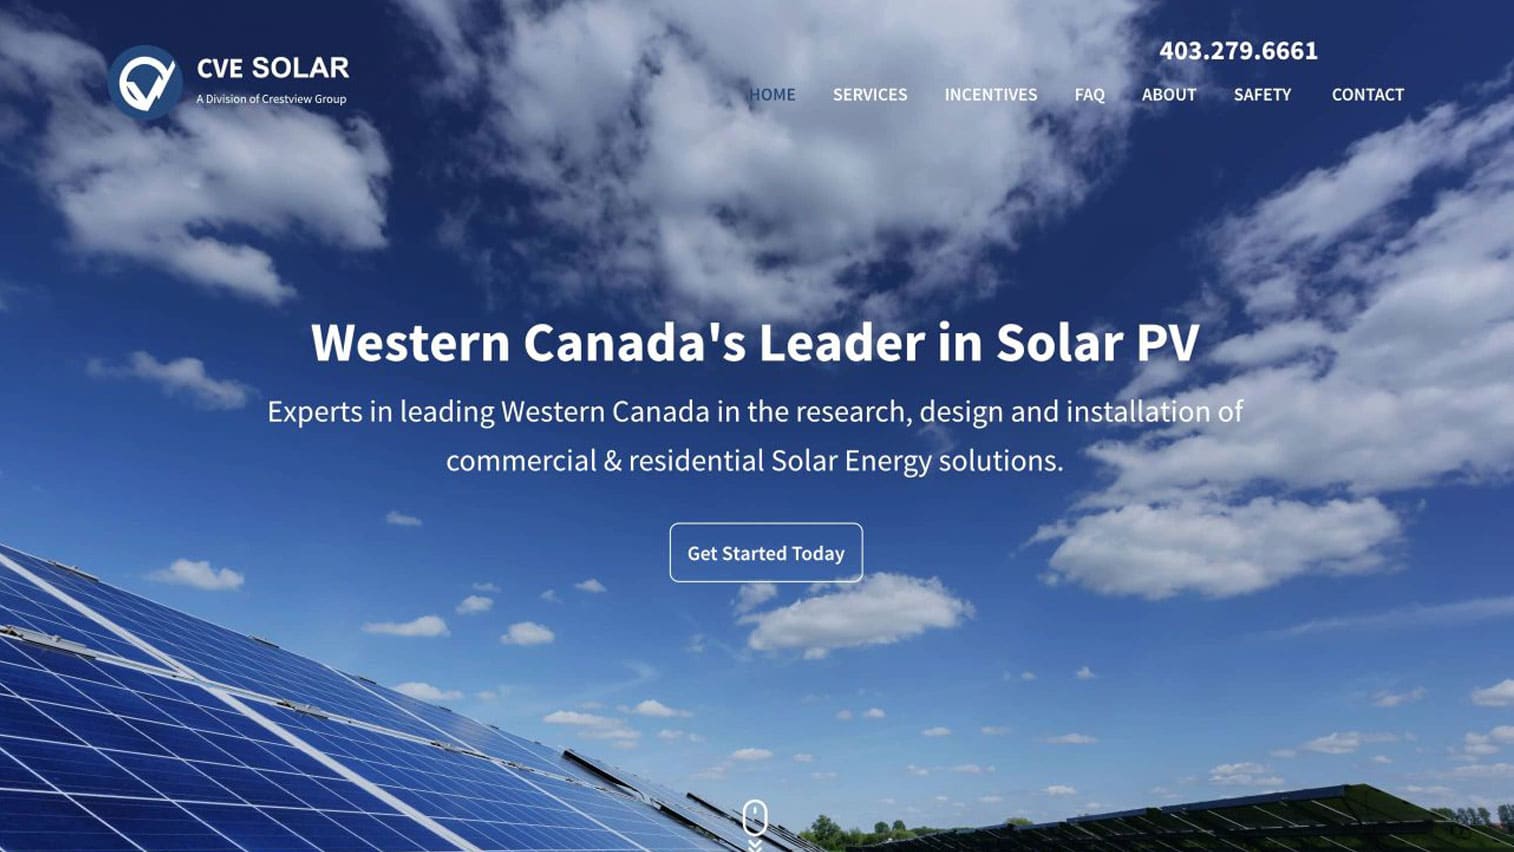 cve-solar website design project